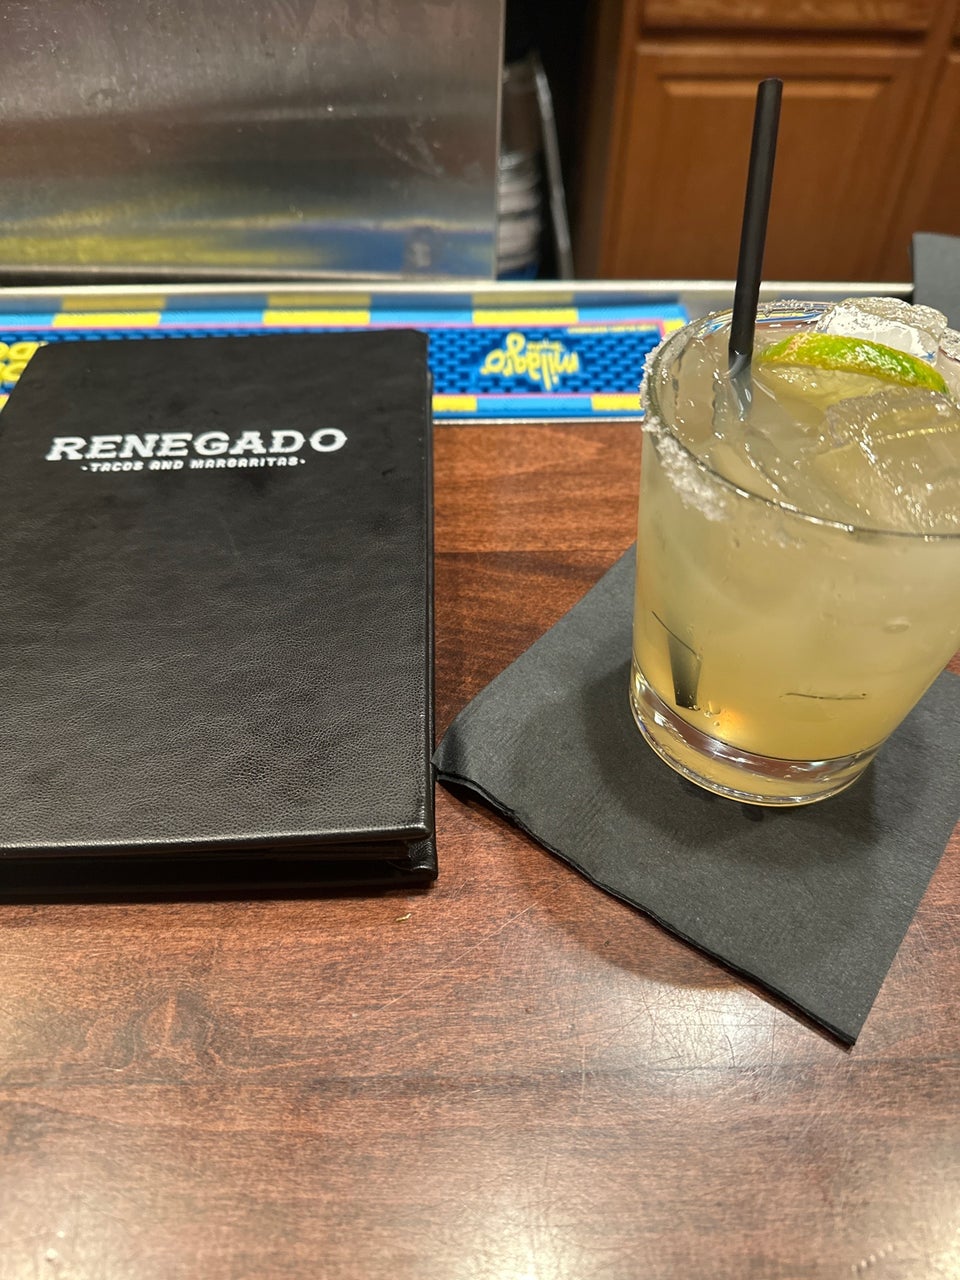 Renegado Tacos and Margaritas